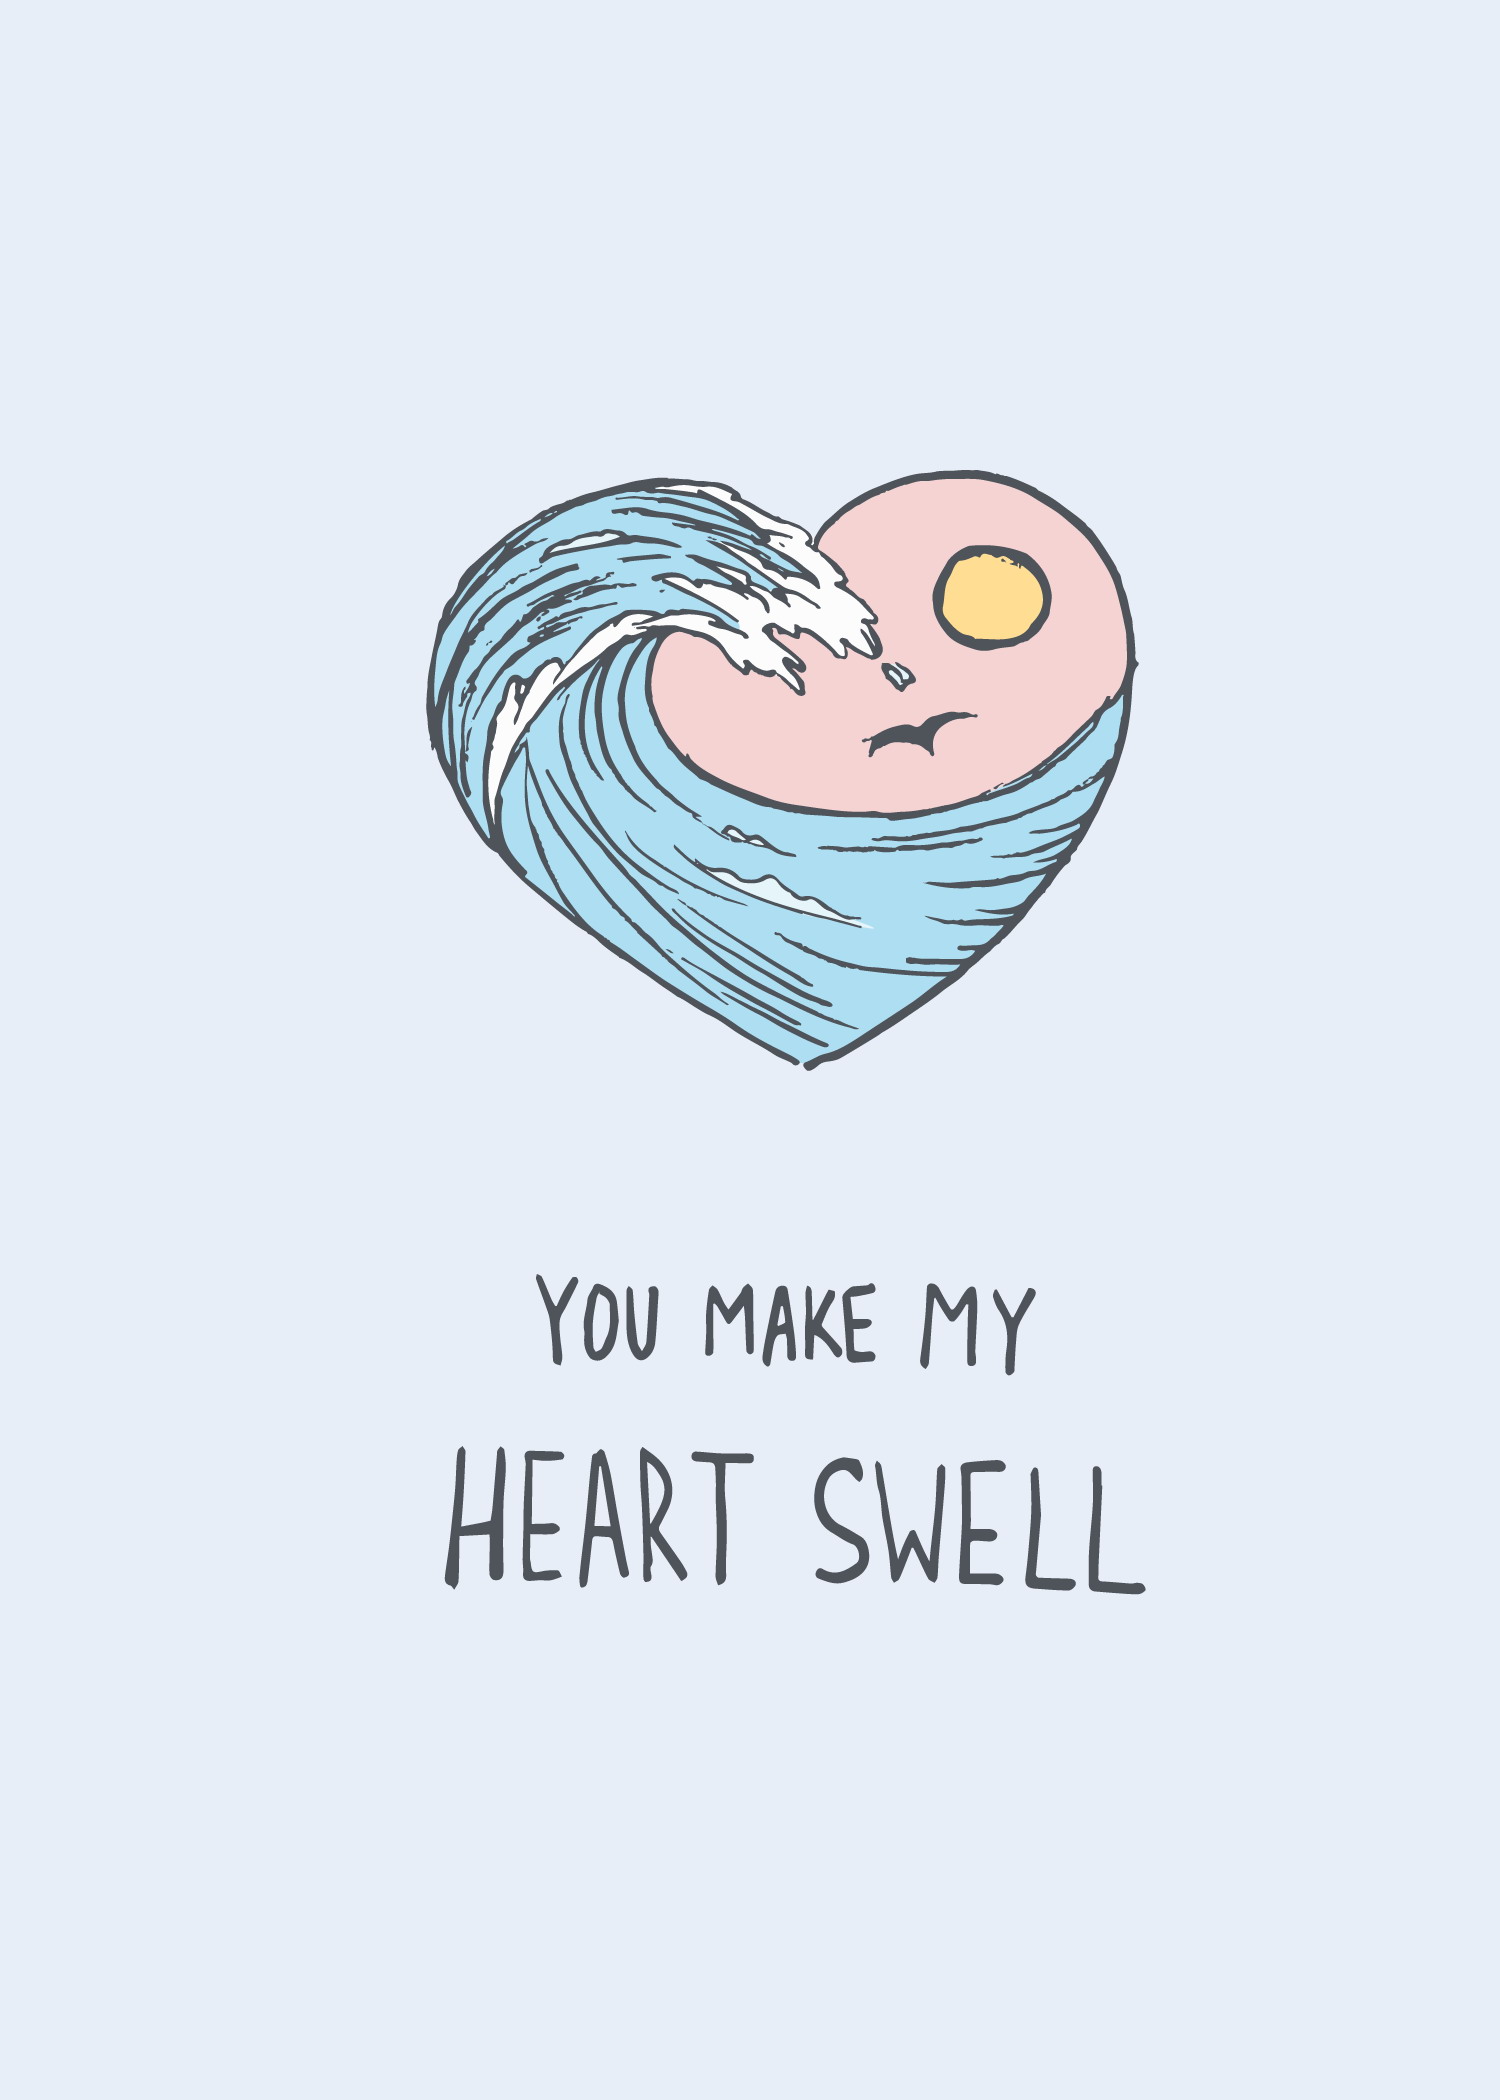 You make my heart swell